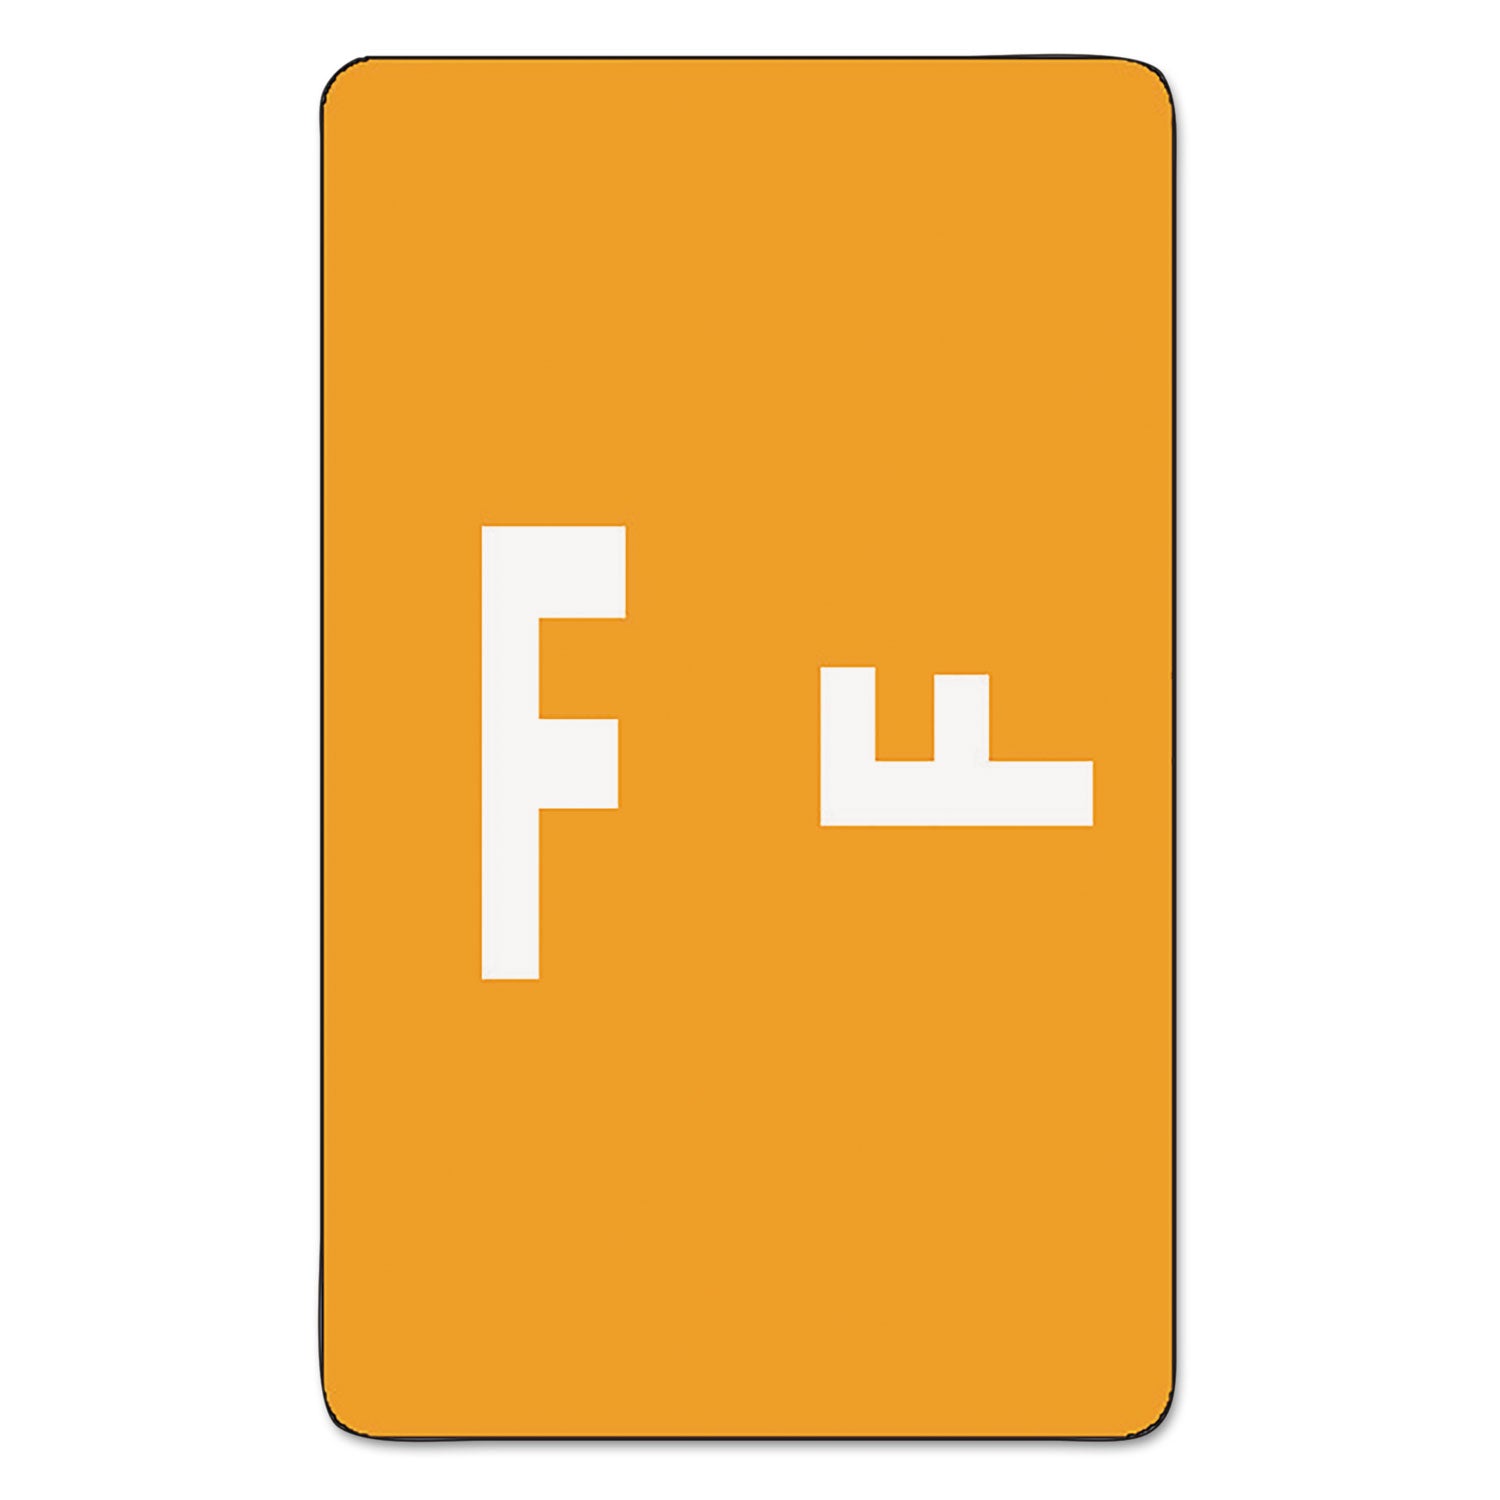 AlphaZ Color-Coded Second Letter Alphabetical Labels, F, 1 x 1.63, Orange, 10/Sheet, 10 Sheets/Pack - 